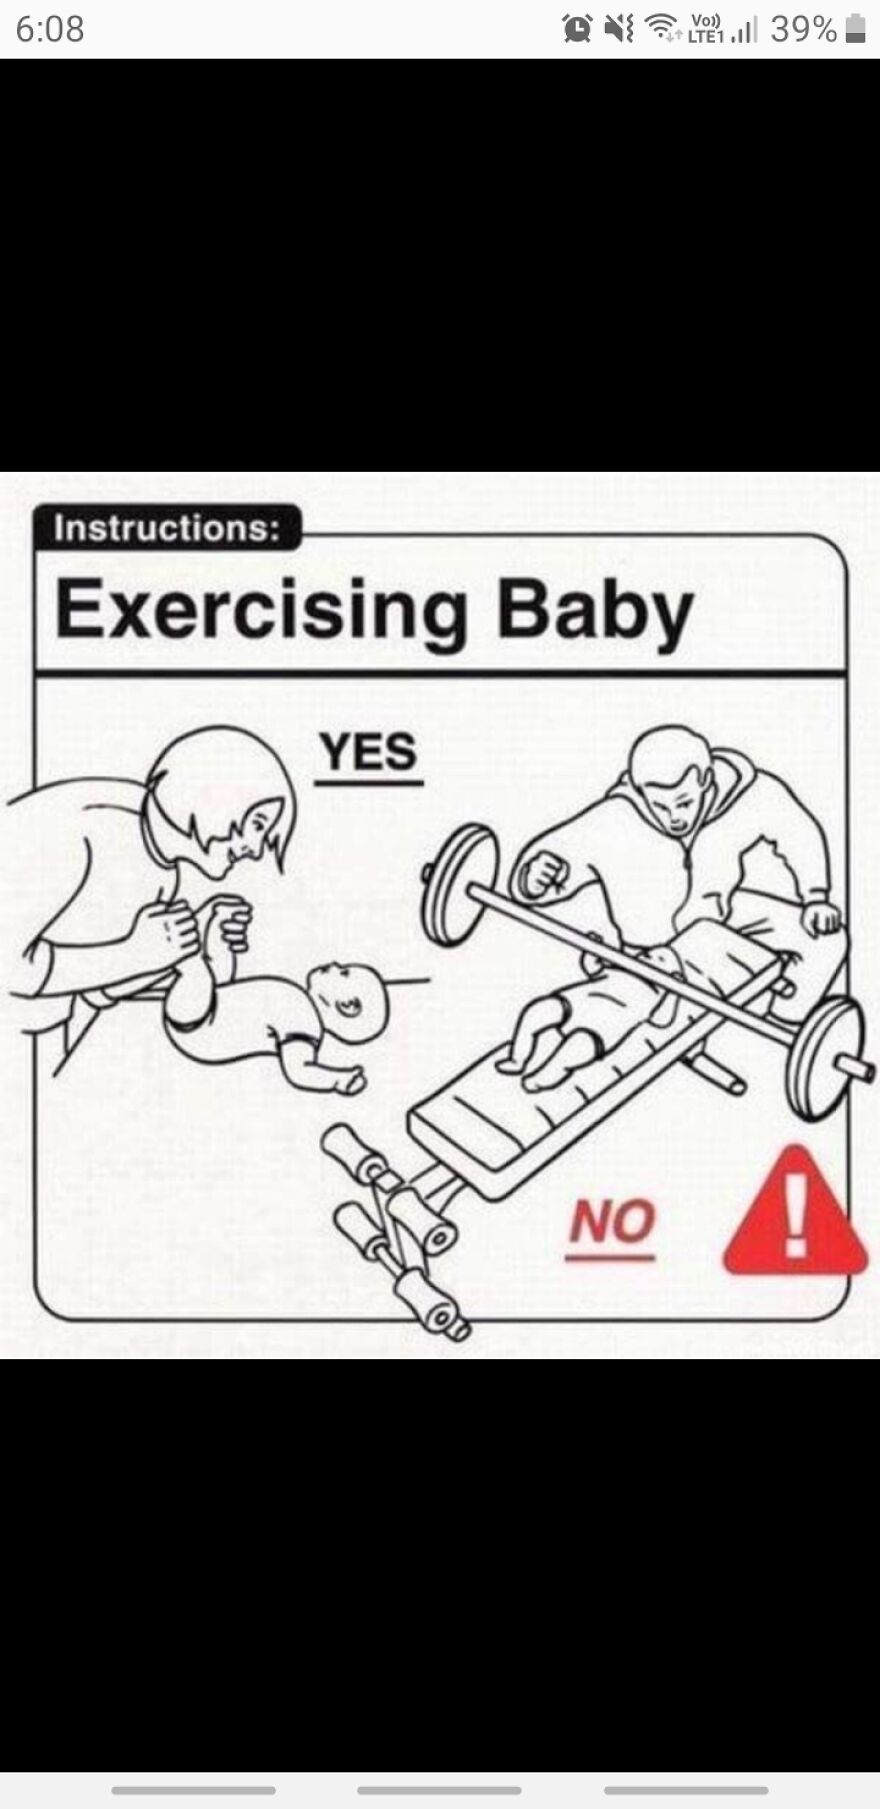 Honey, We Need To Cancel The Baby's Gym Membership